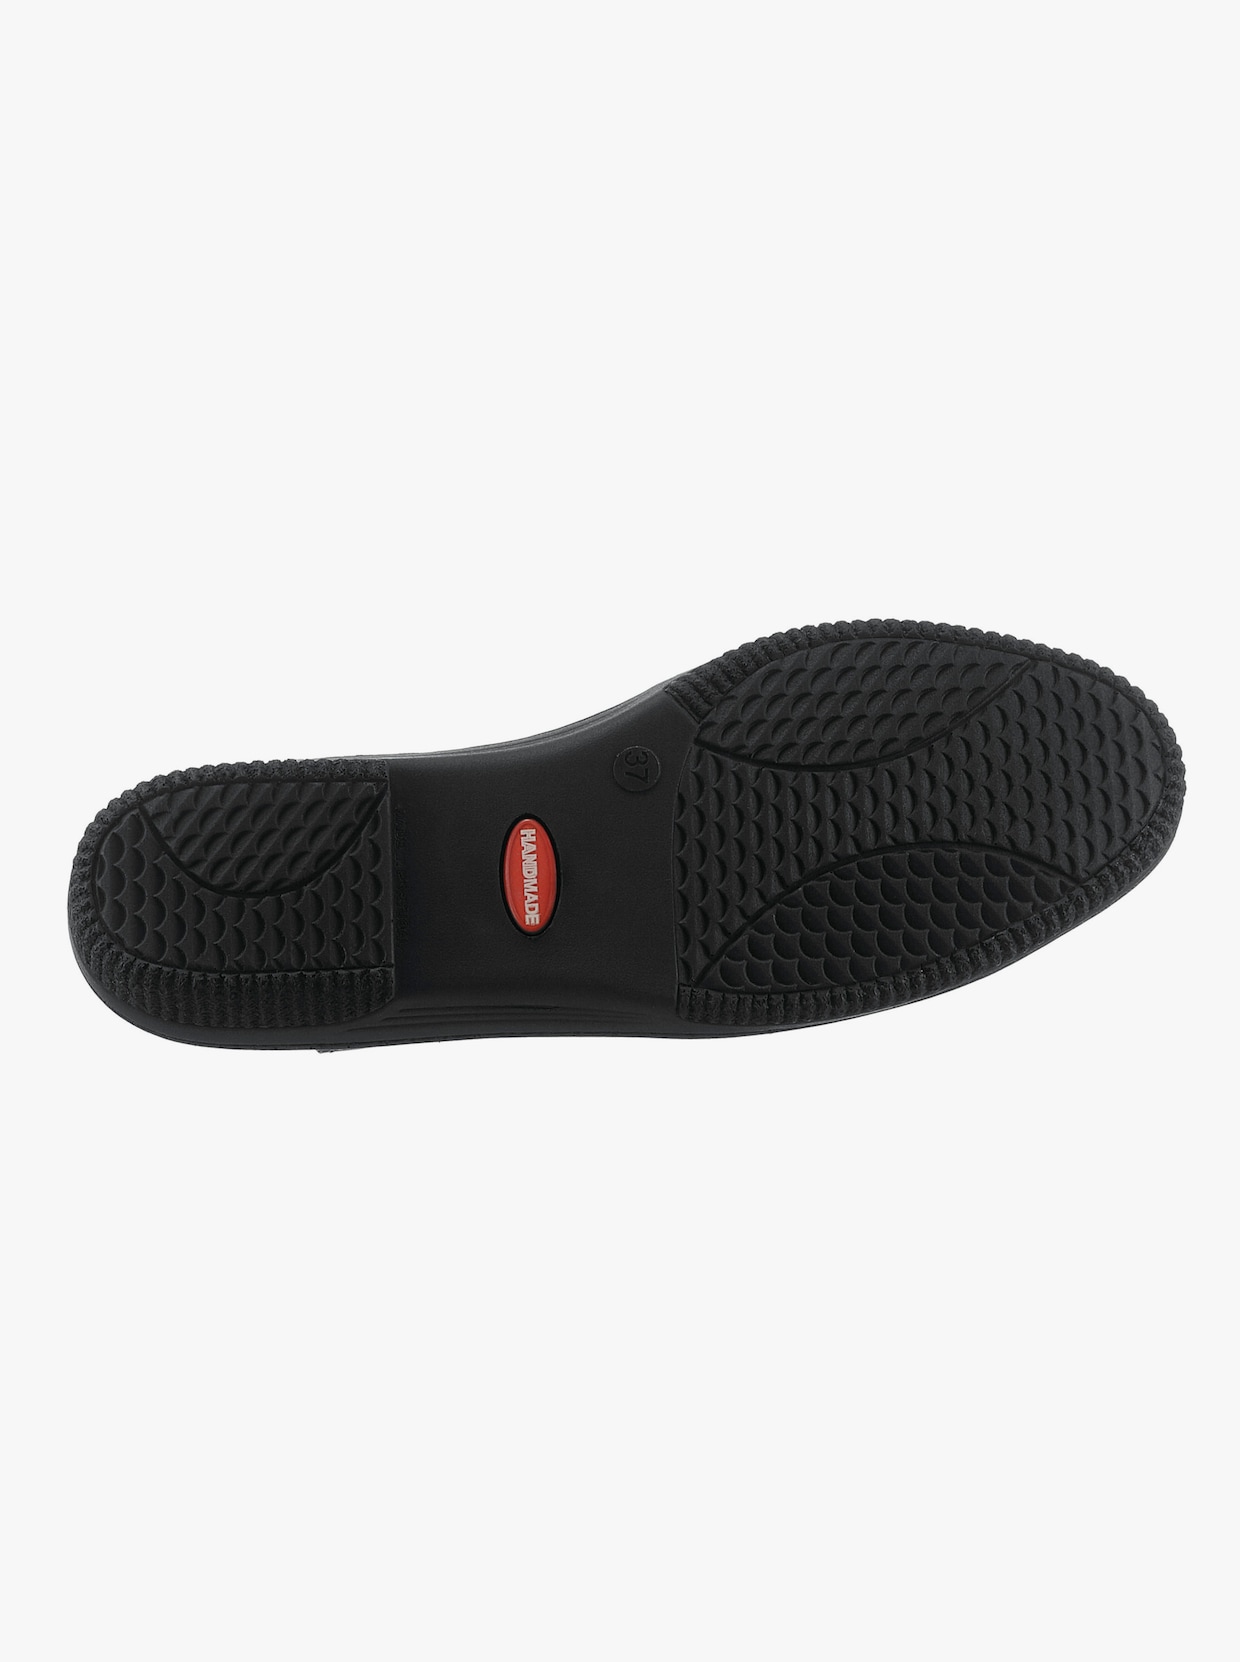 Kiarteflex Sandále - čierna